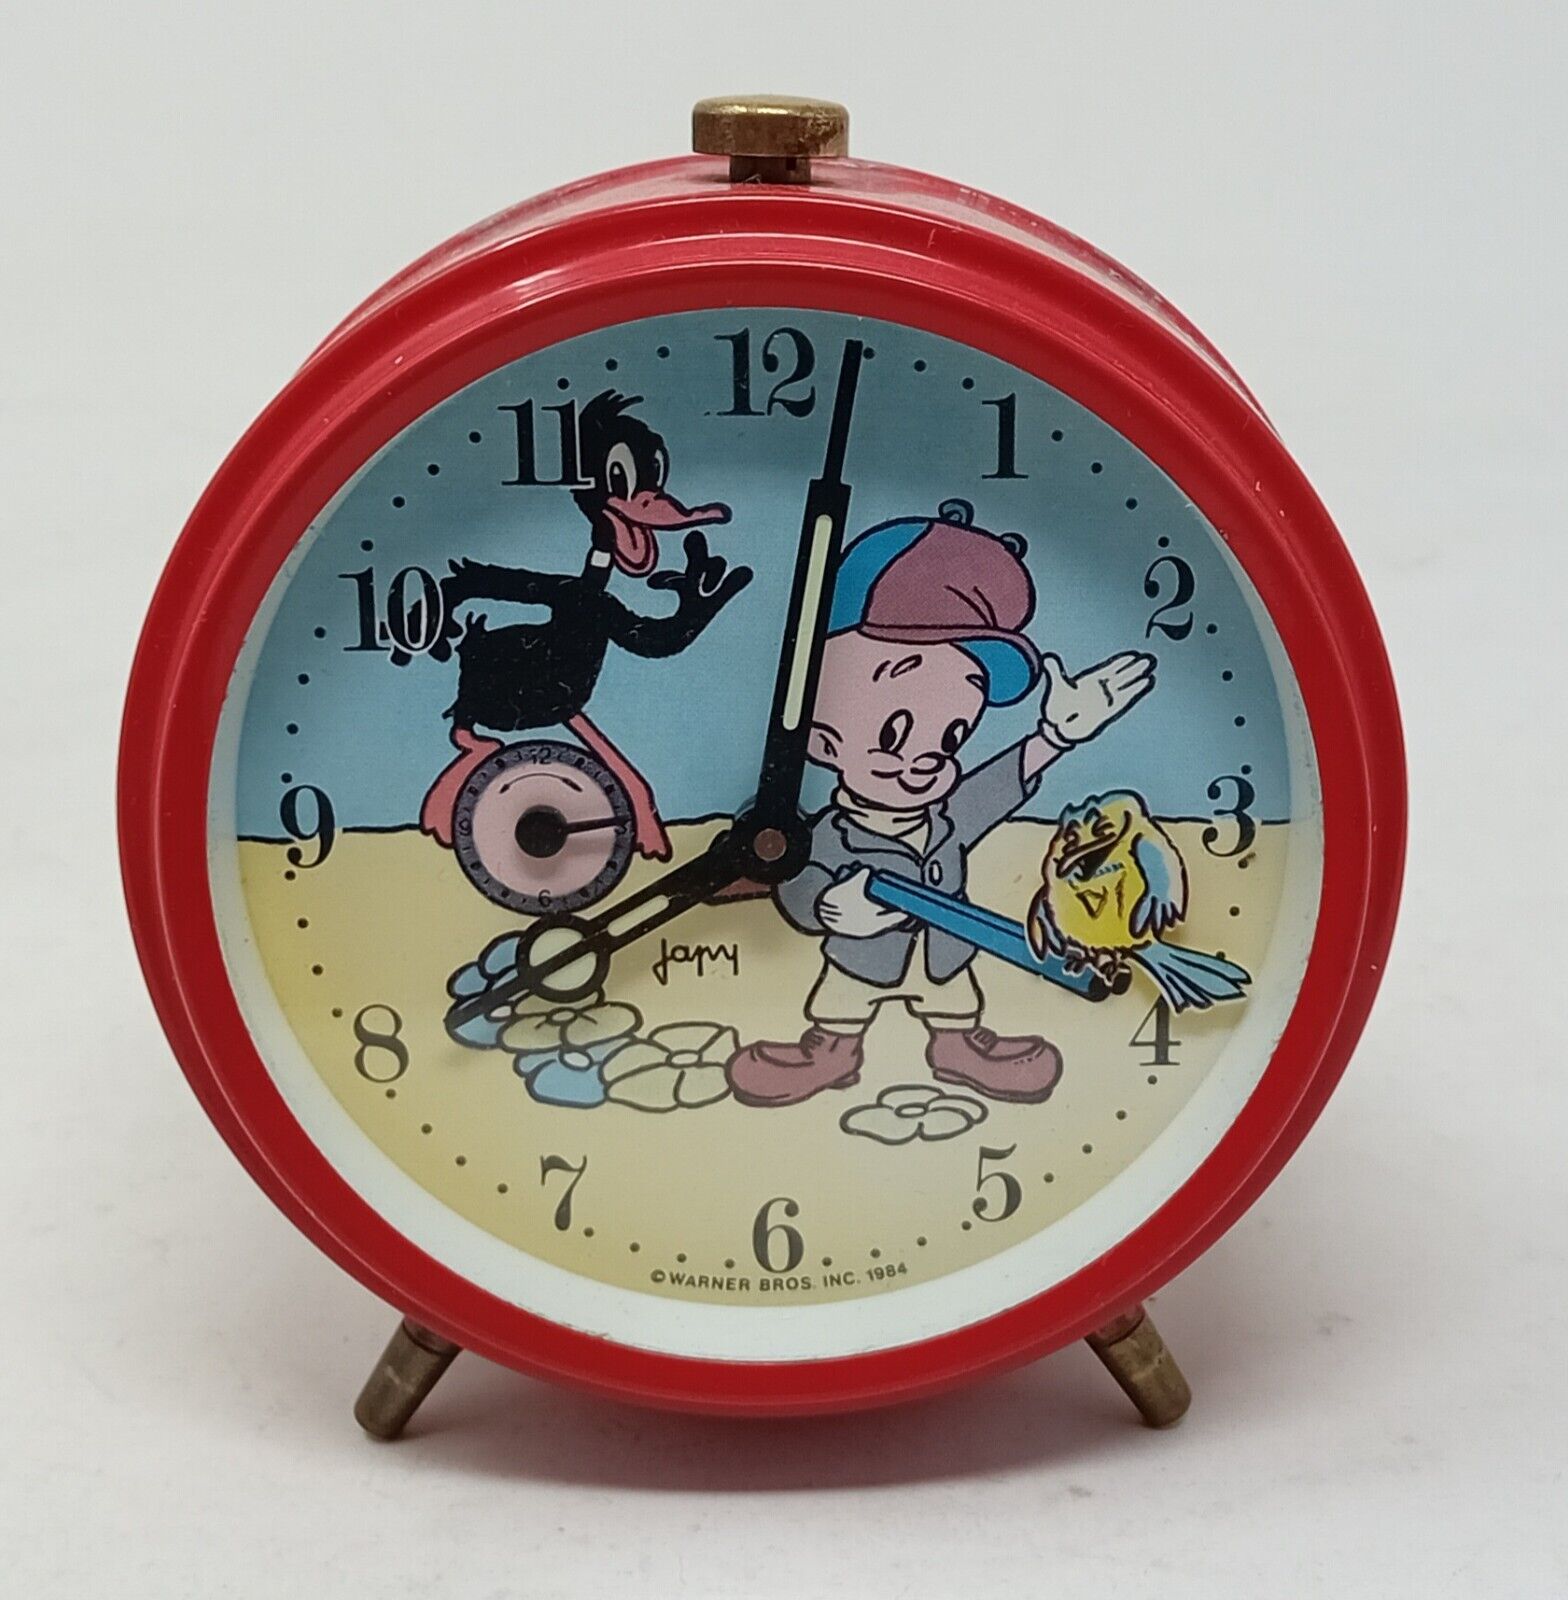 Vintage Japy Warner Bros Daffy Duck novelty animated Alarm Clock